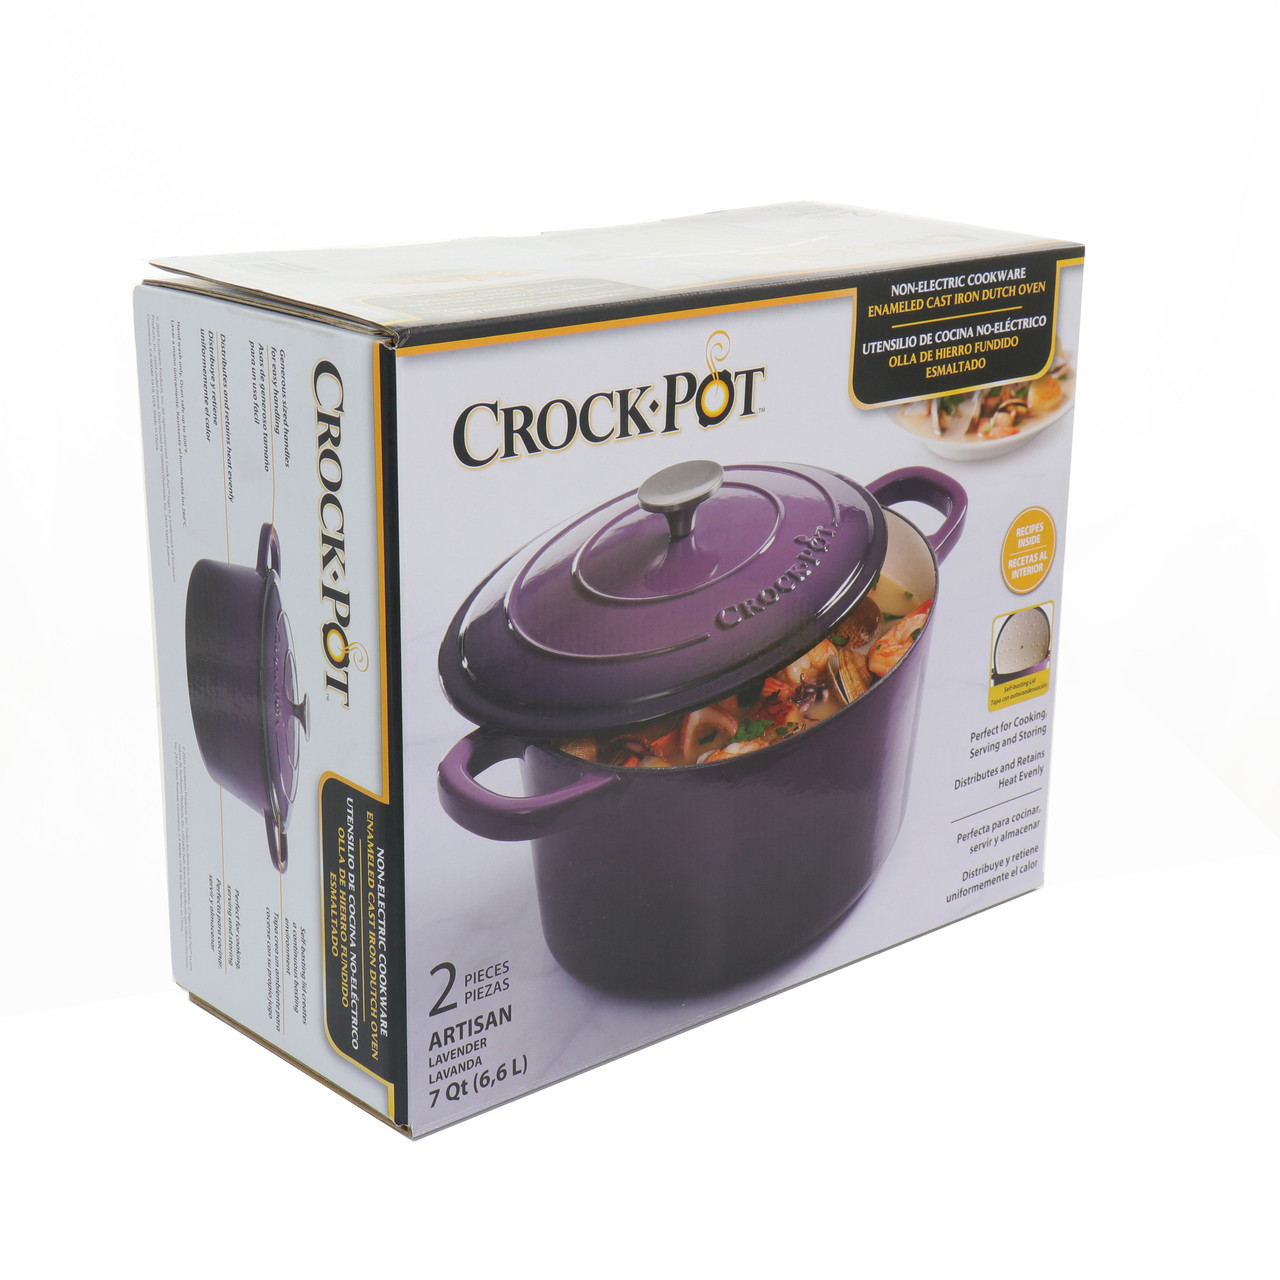 Crock-Pot 7 Quart Enameled Cast Iron Dutch Oven with Lid 